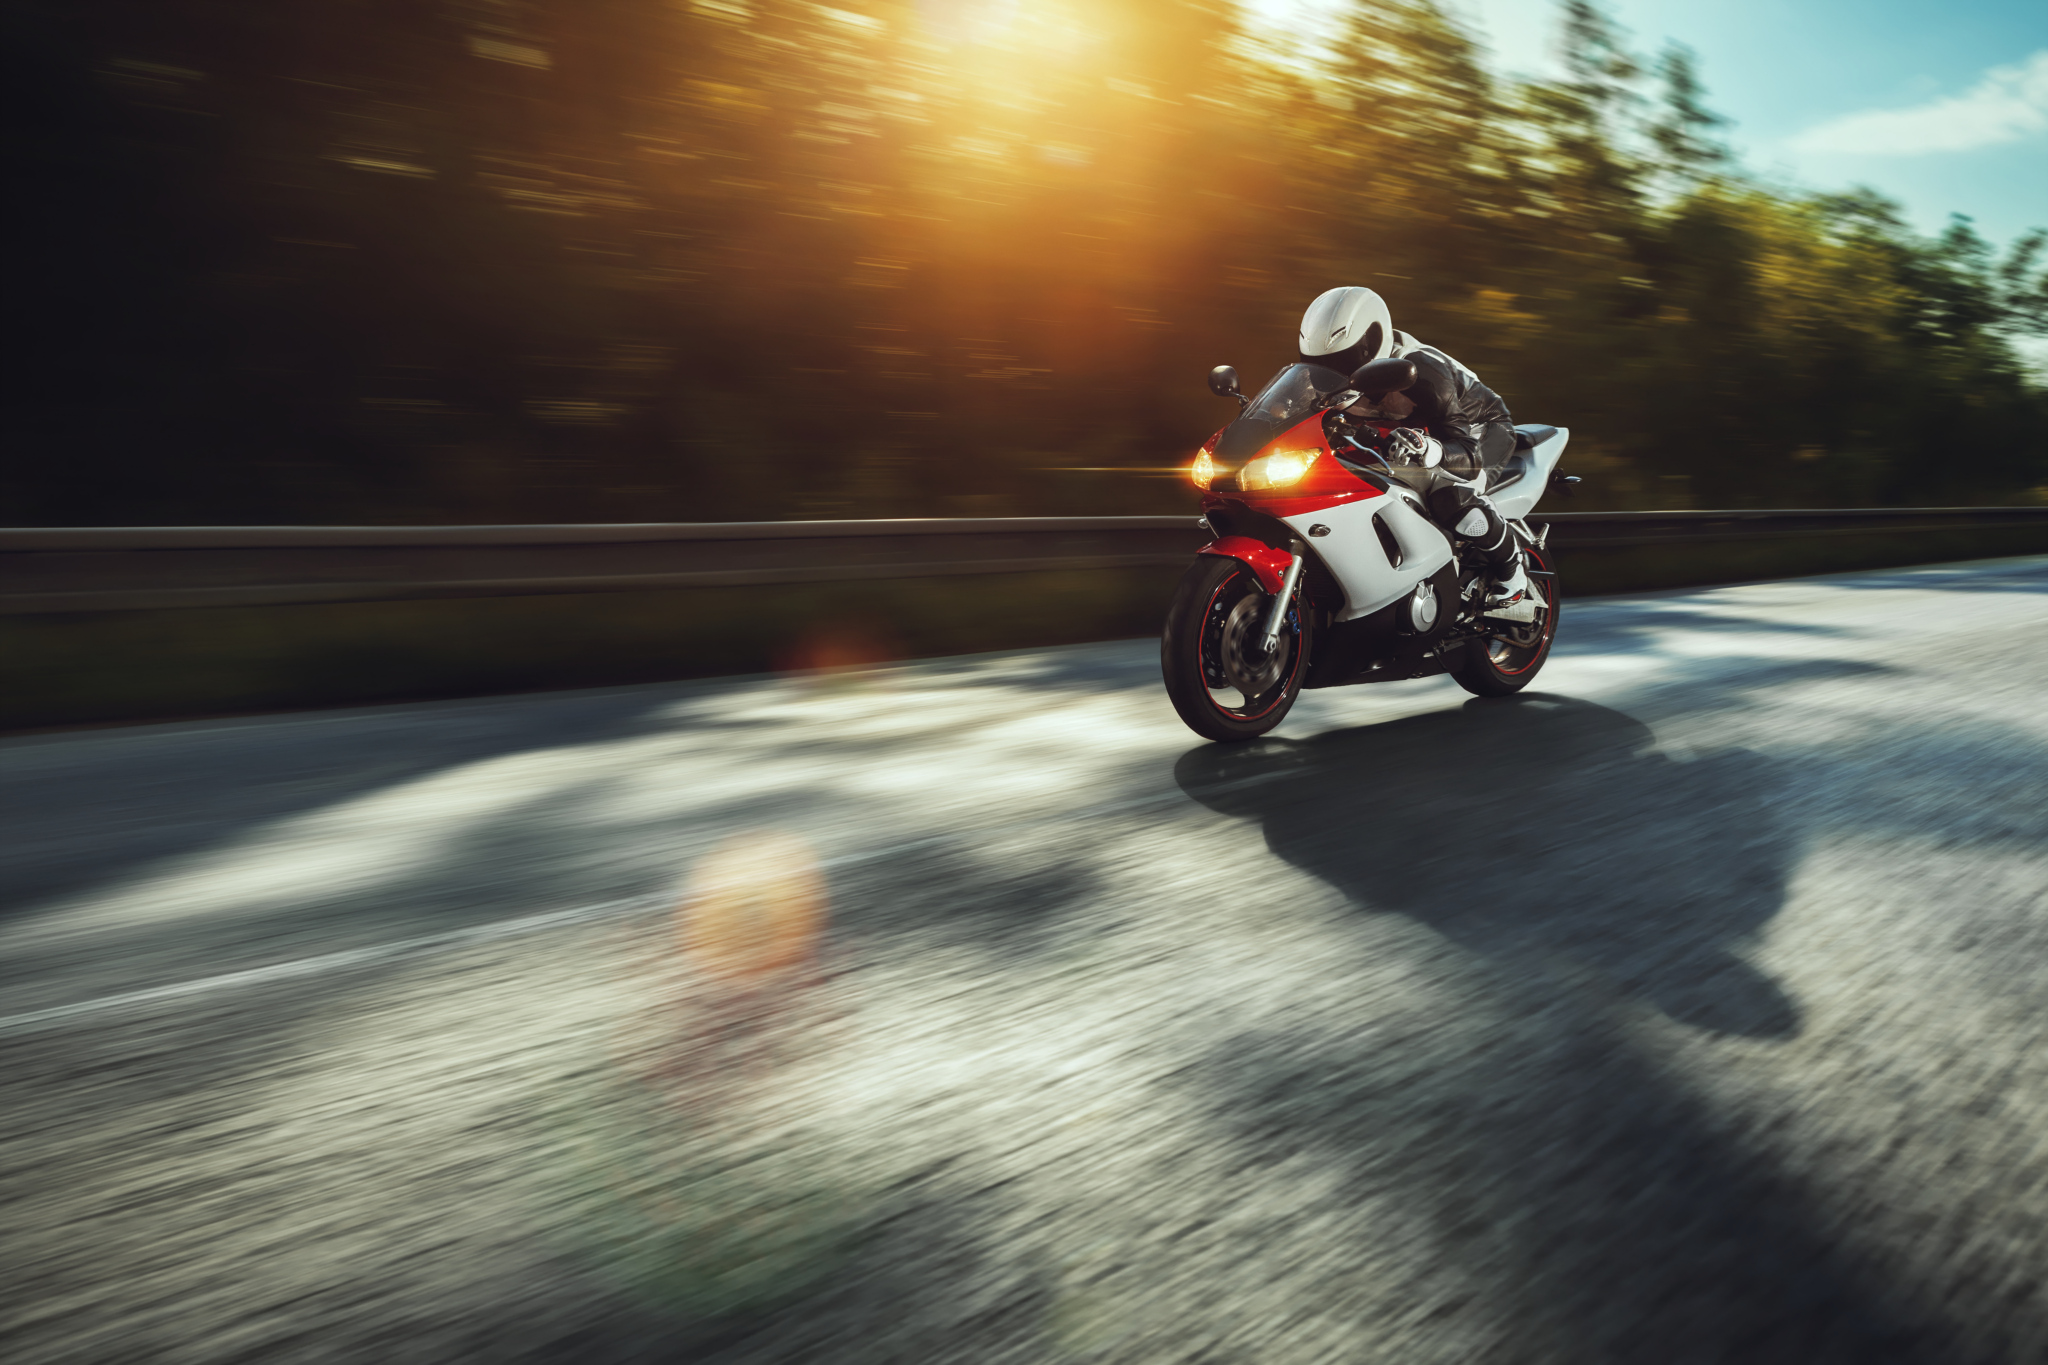 man riding motorcycle in asphalt road